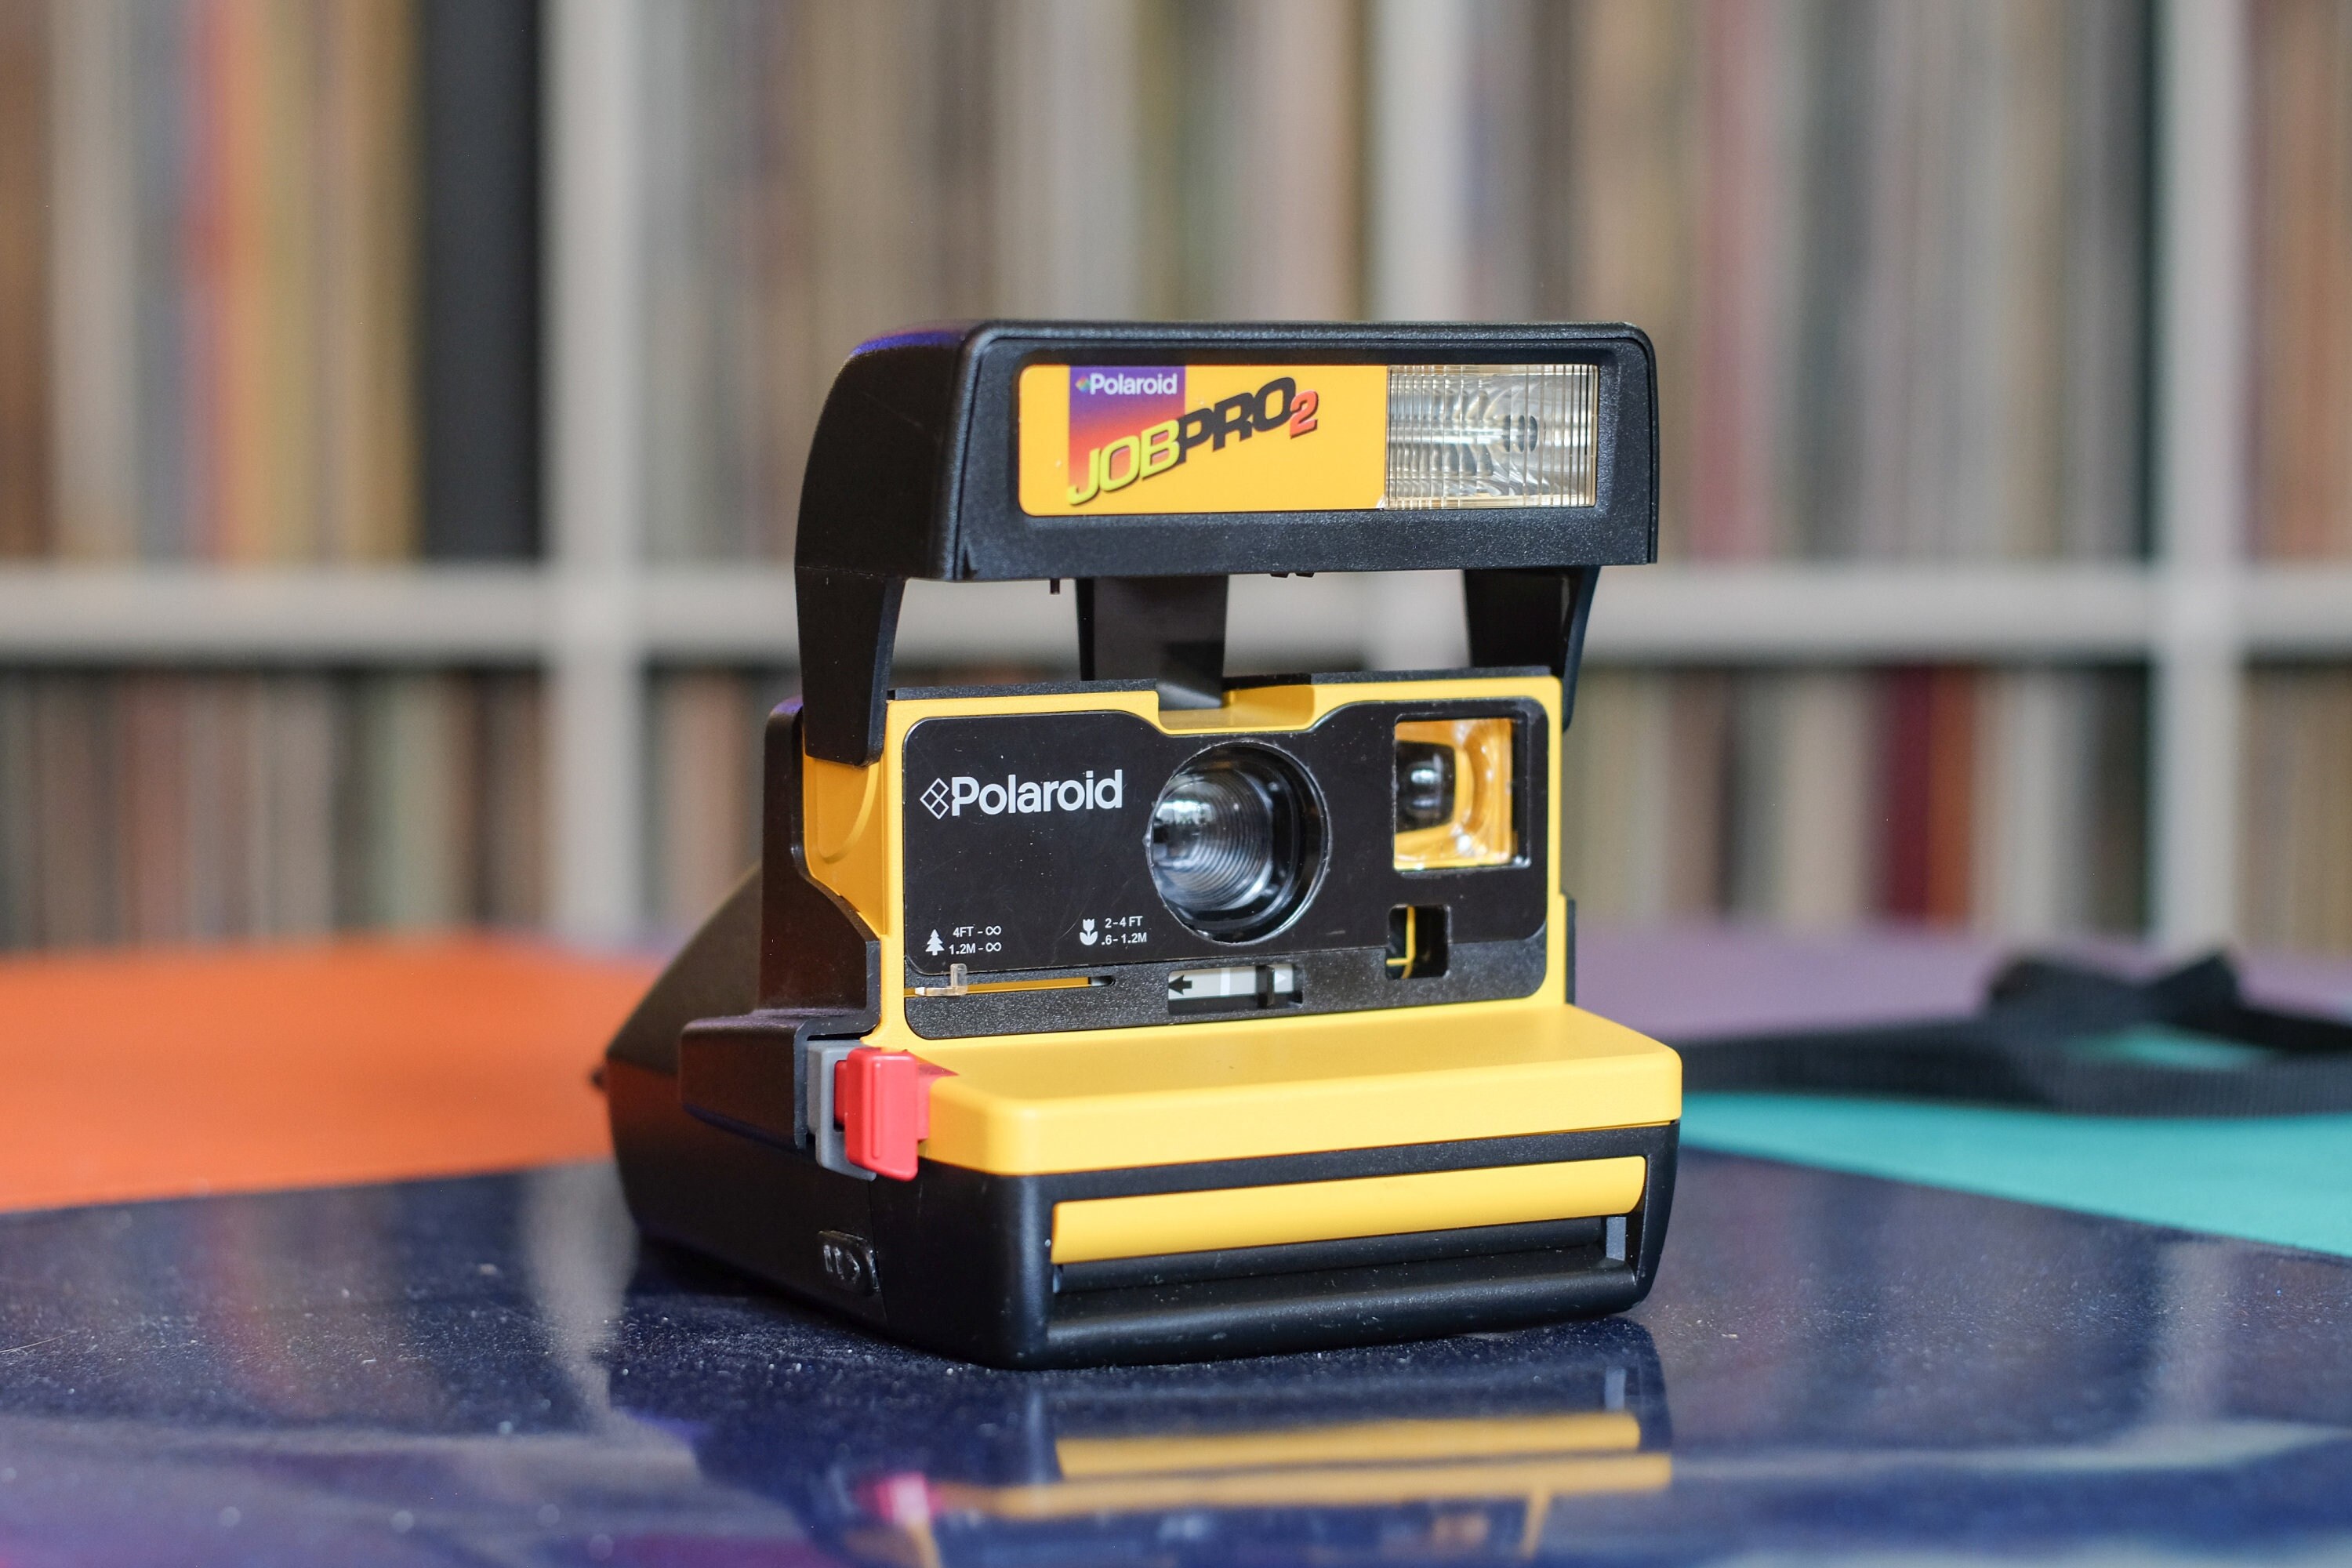 Polaroid job pro 2 - Etsy España